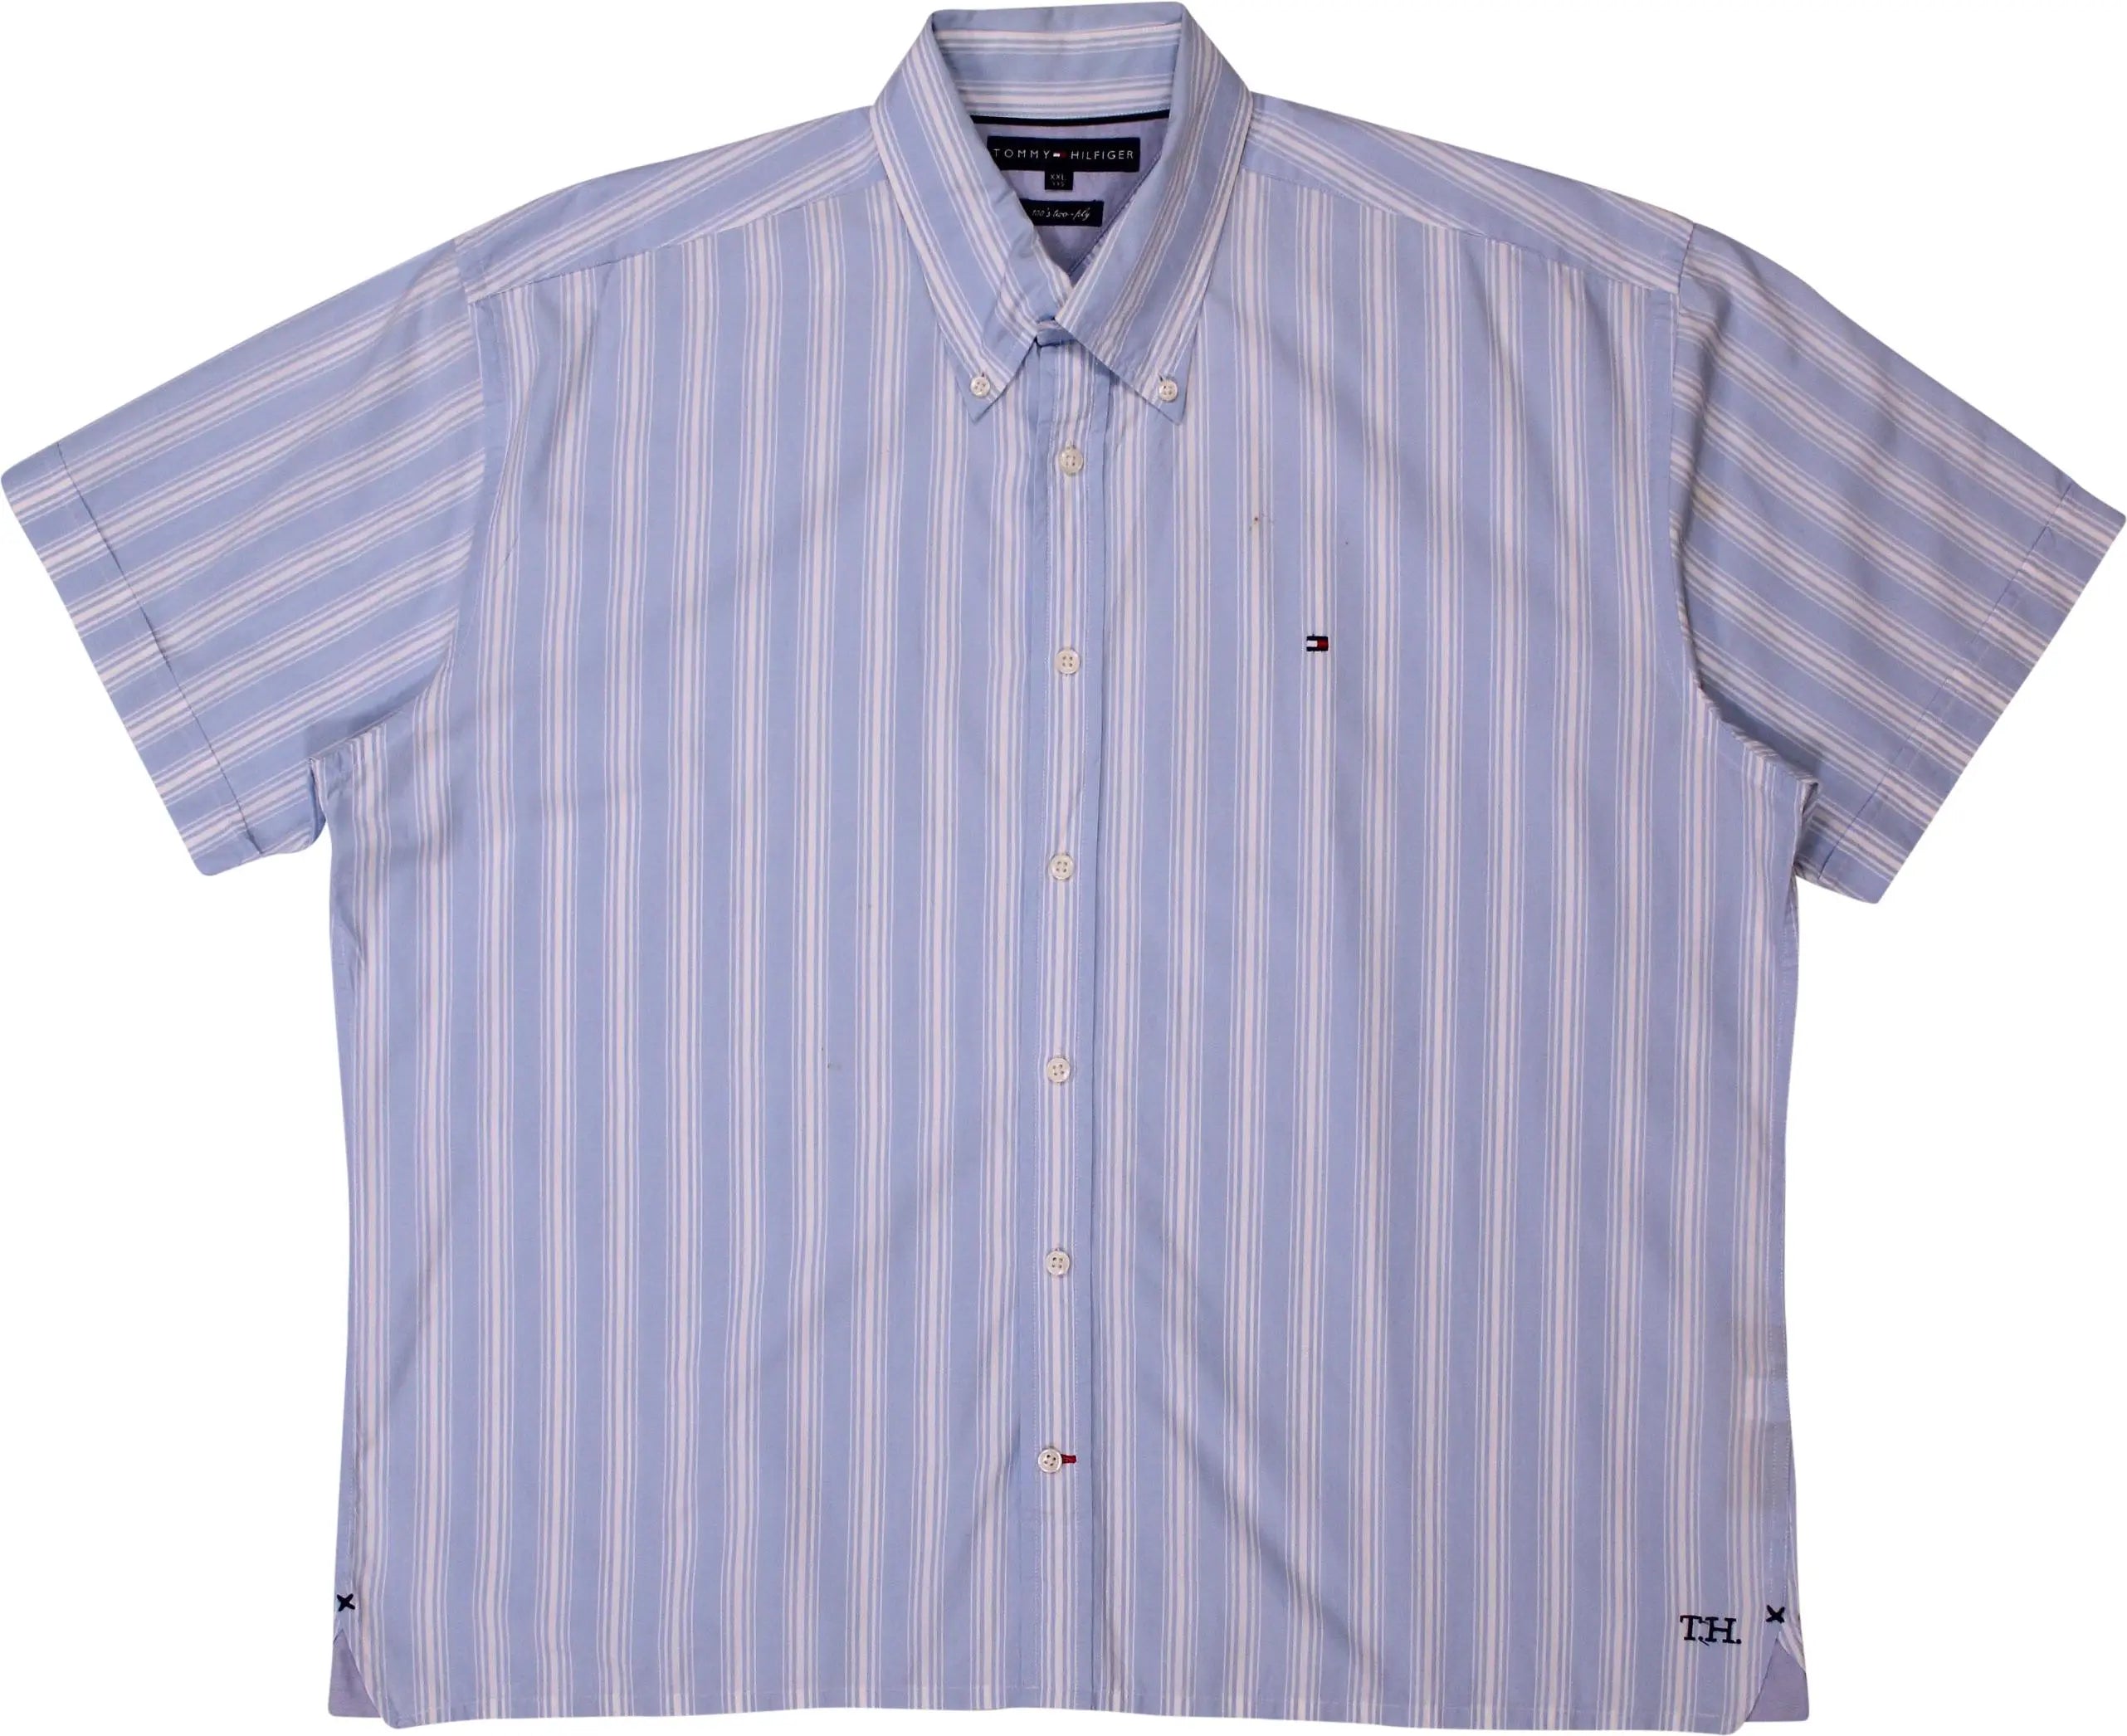 Tommy Hilfiger - Tommy Hilfiger Short Sleeve Shirt- ThriftTale.com - Vintage and second handclothing